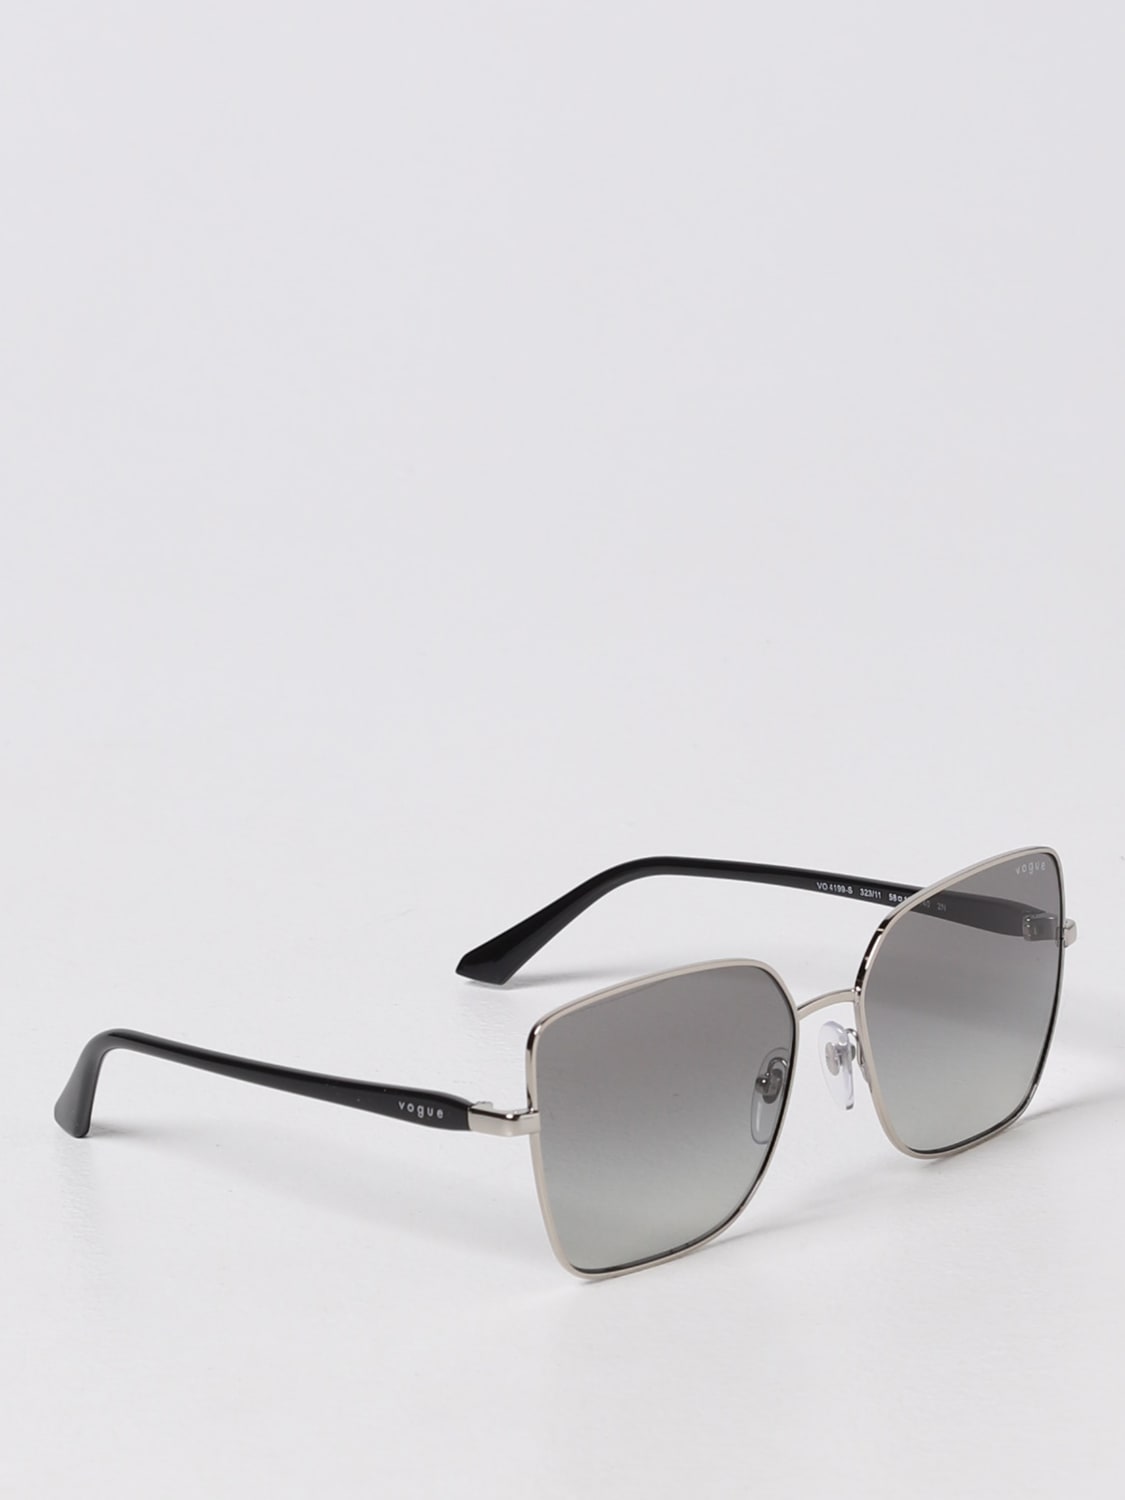 Sunglasses Vogue: Vogue sunglasses in metal grey 2